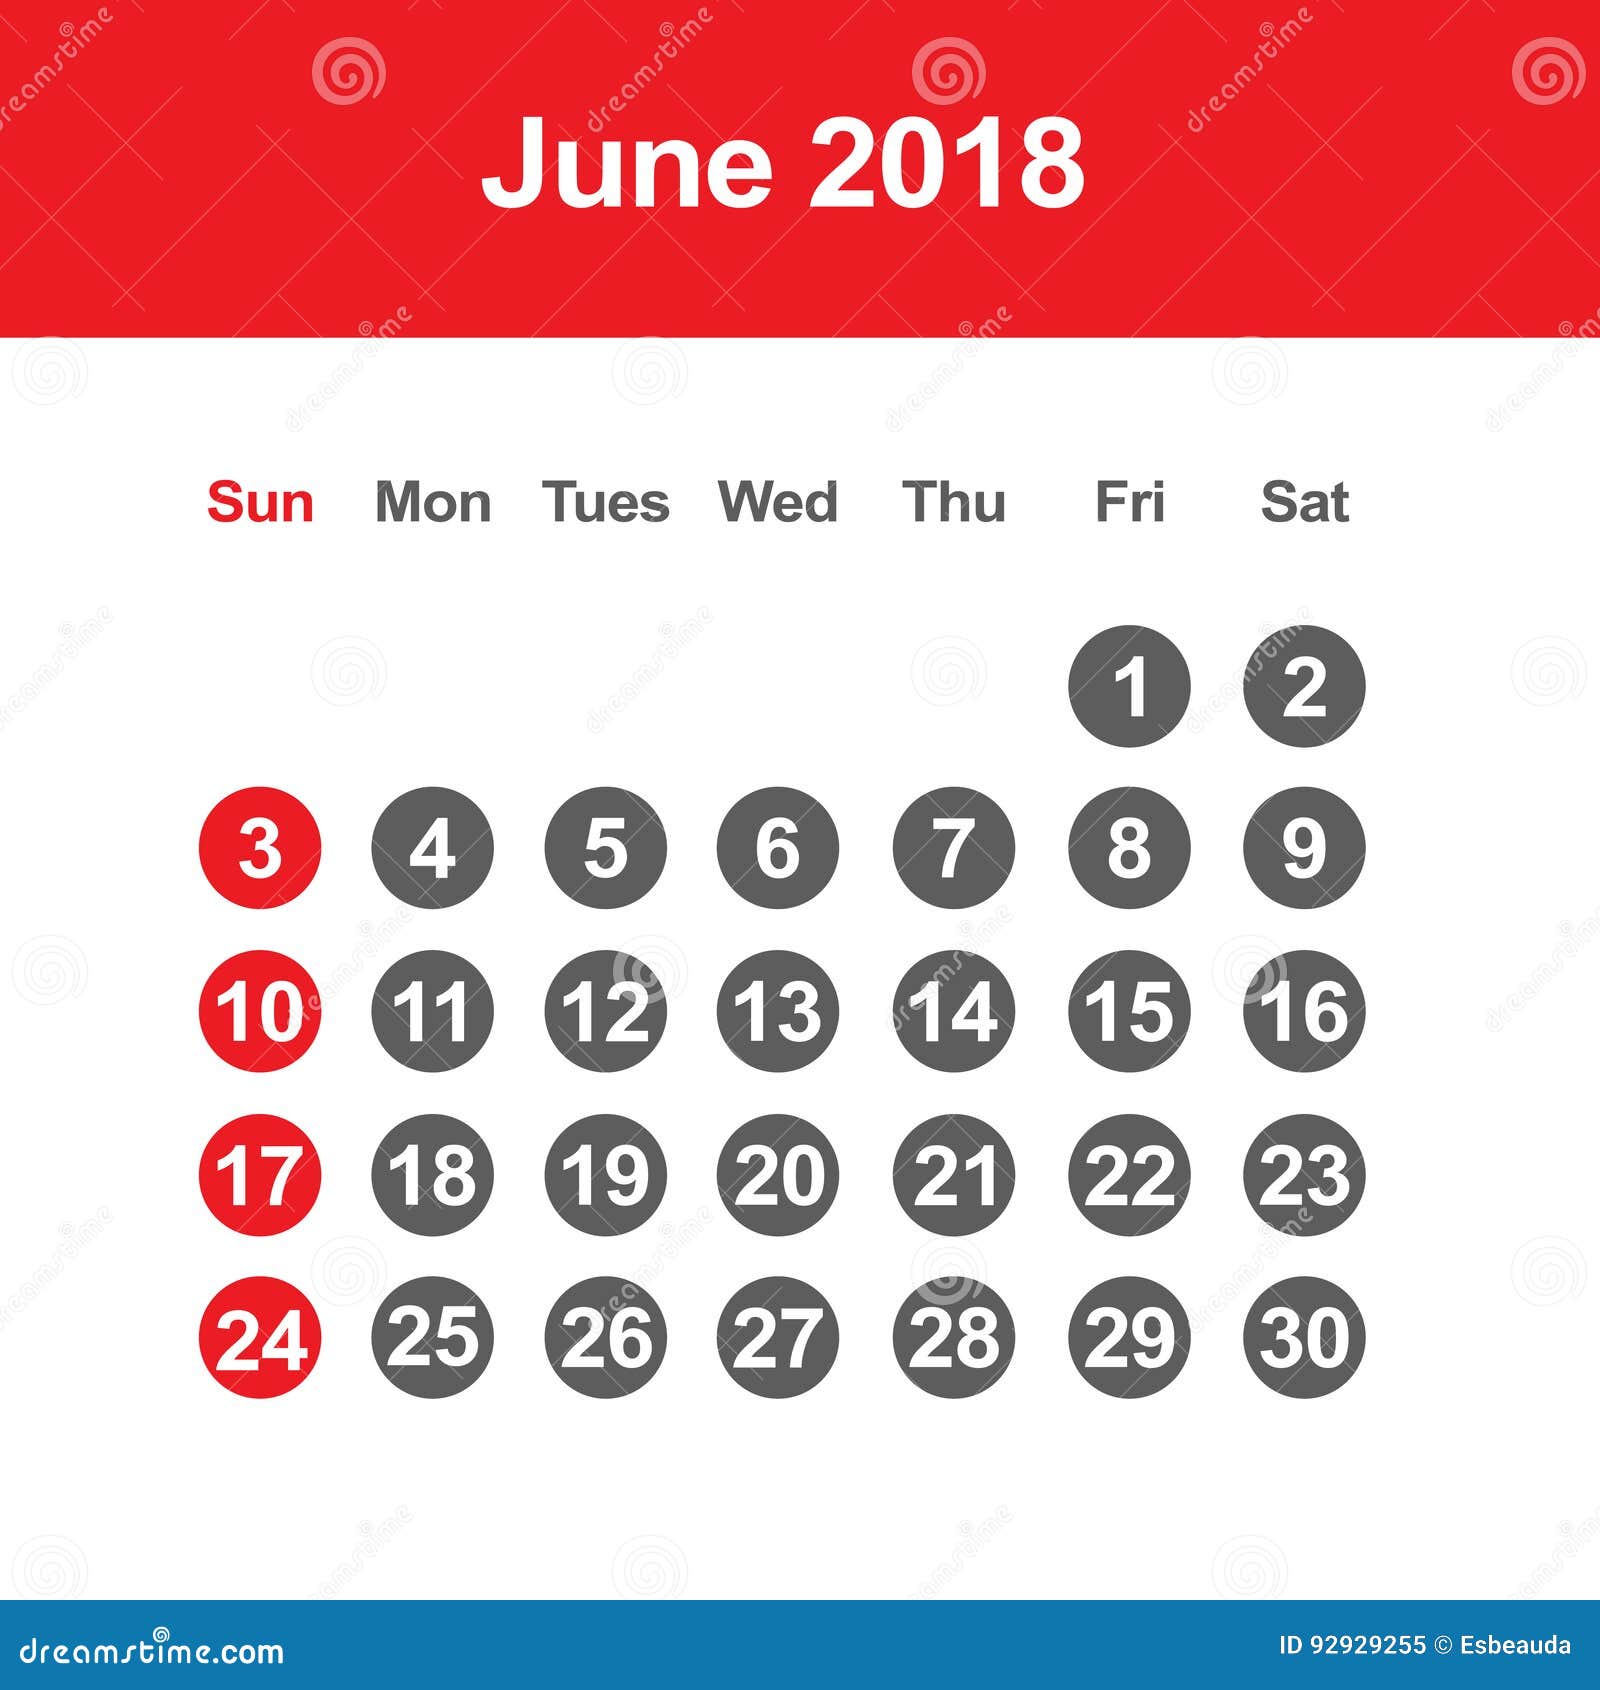 june-2018-calendar-pdf-word-execl-vertical-and-landscape-format